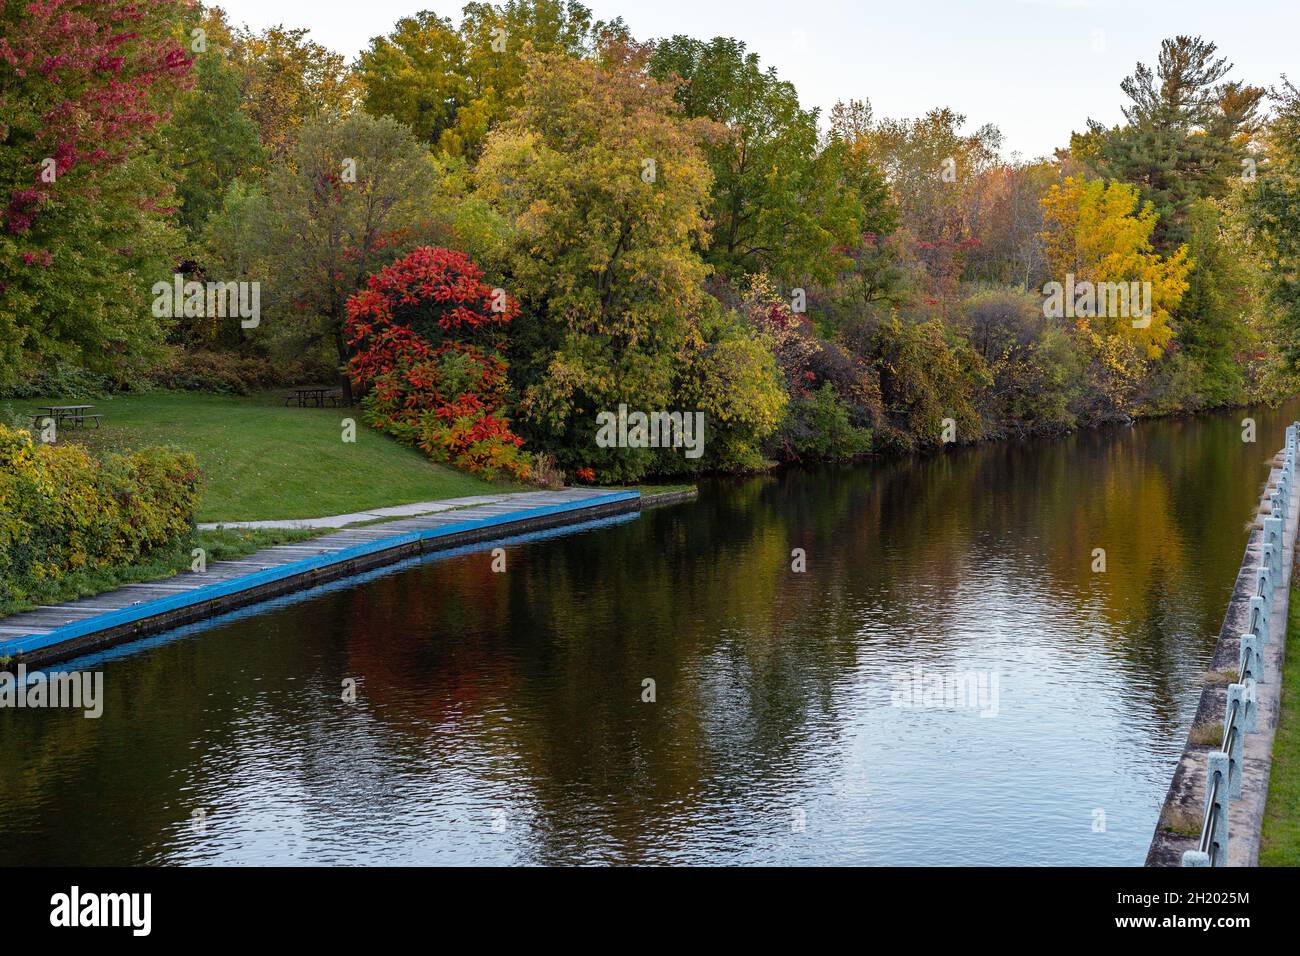 Rideau Canal, Hog's Back locks in Ottawa. Fall seasonand colorful trees ...